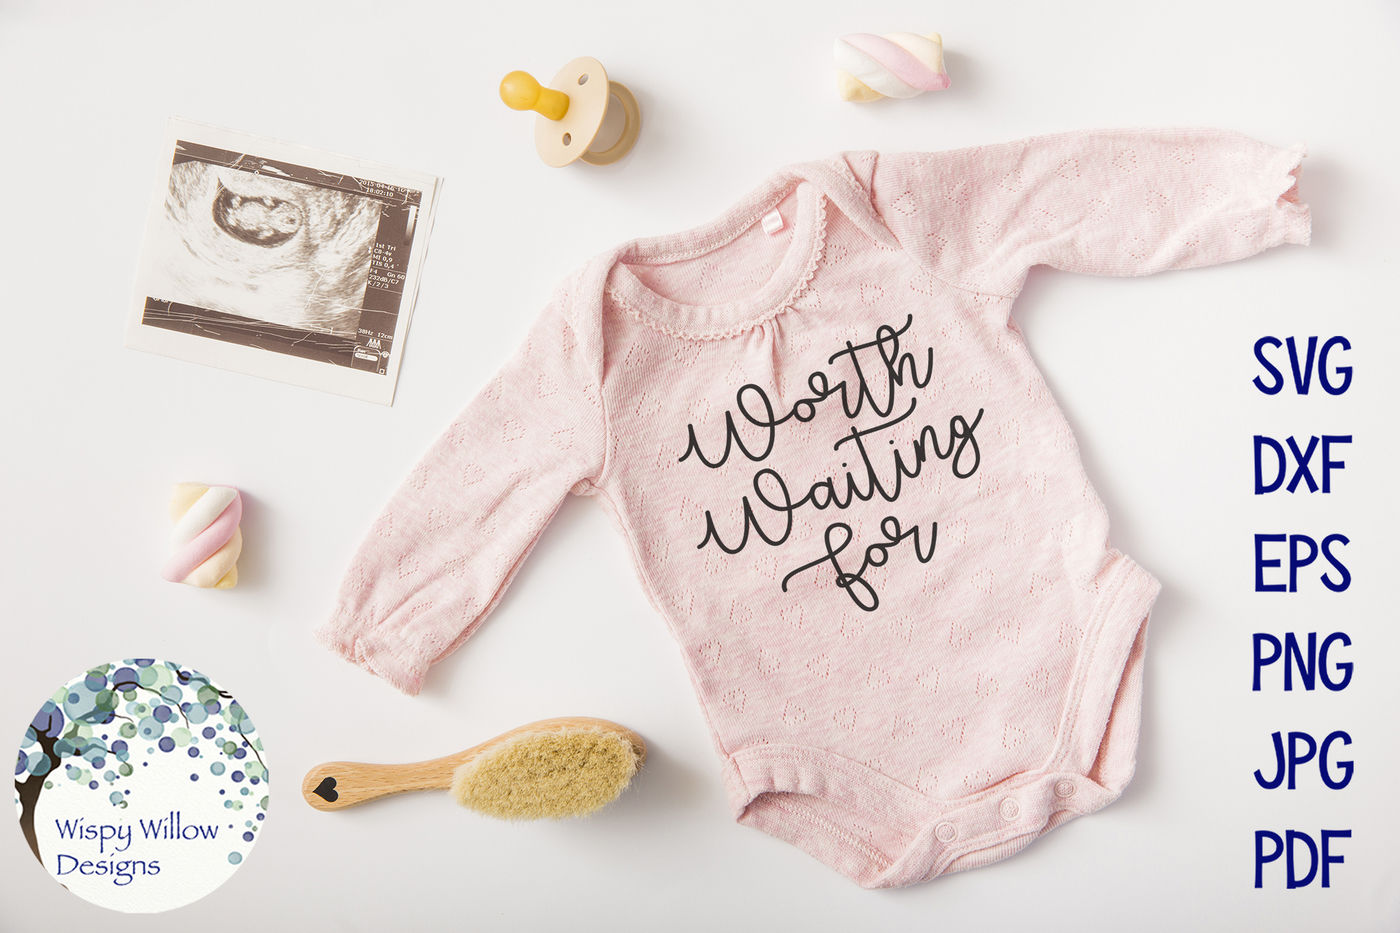 Download Newborn Baby SVG Bundle By Wispy Willow Designs | TheHungryJPEG.com